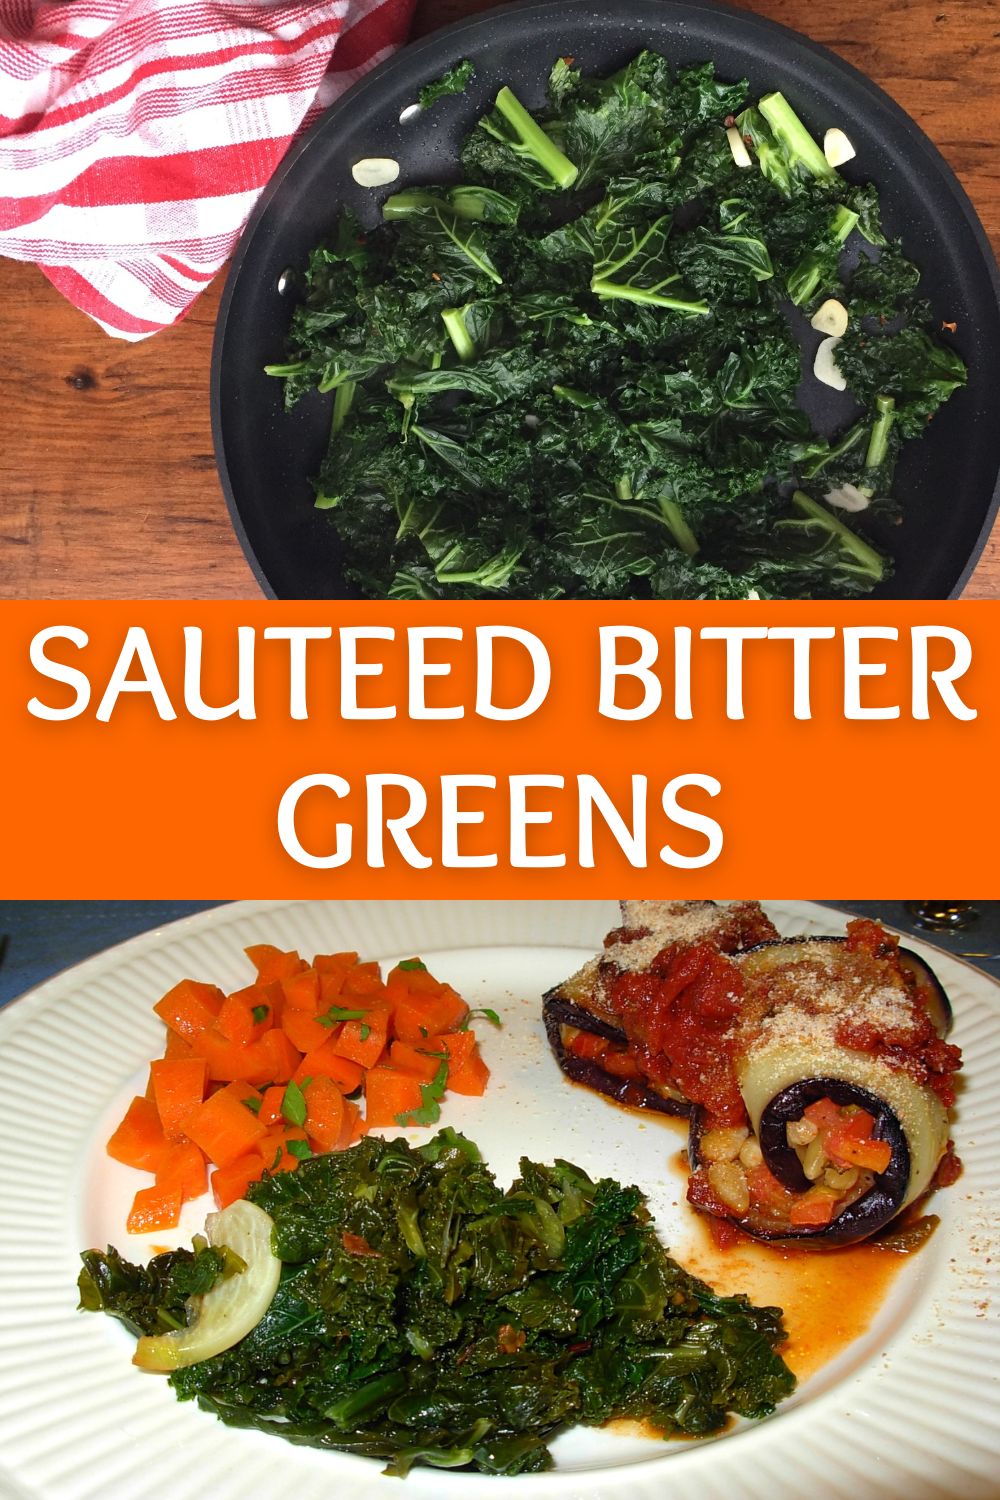 Sauteed bitter greens